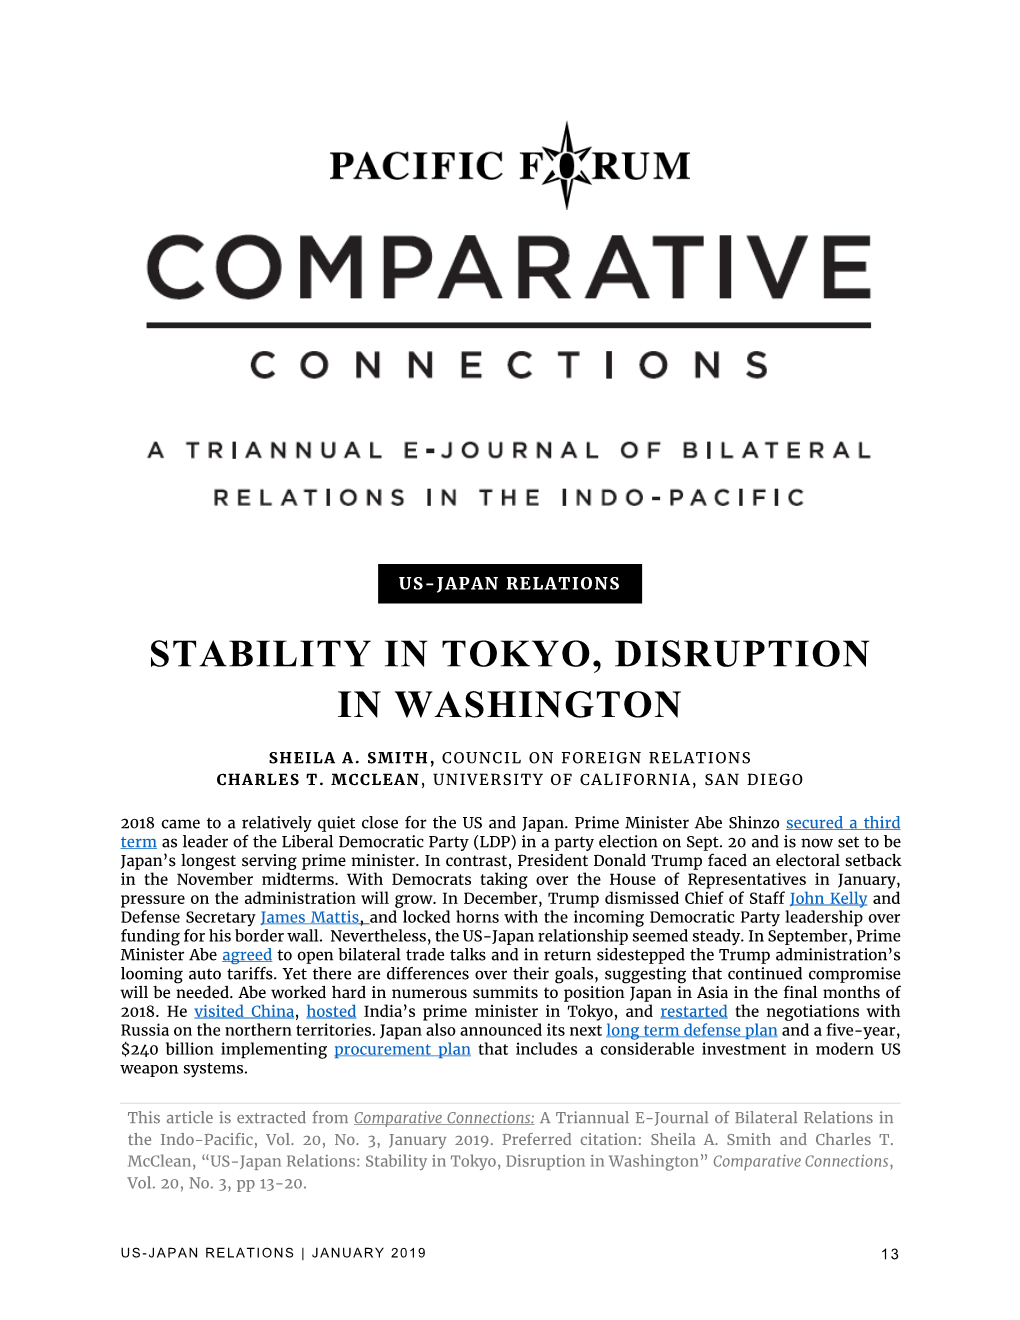 Stability in Tokyo, Disruption in Washington